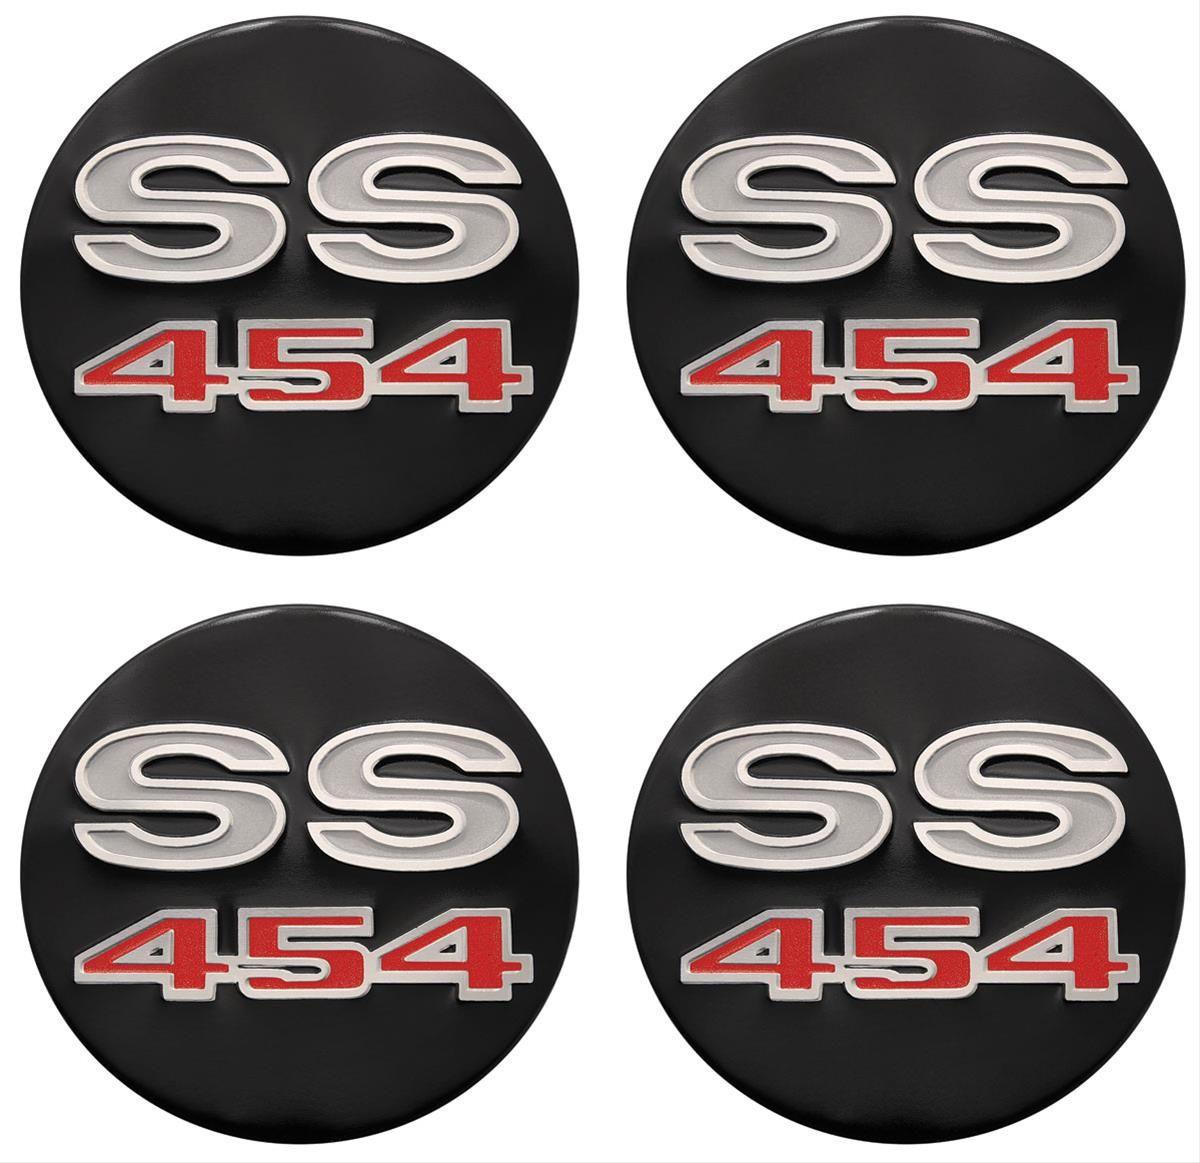 SS 454 Logo - 1970 CHEVROLET CHEVELLE Original Parts Group Wheel Center Cap ...